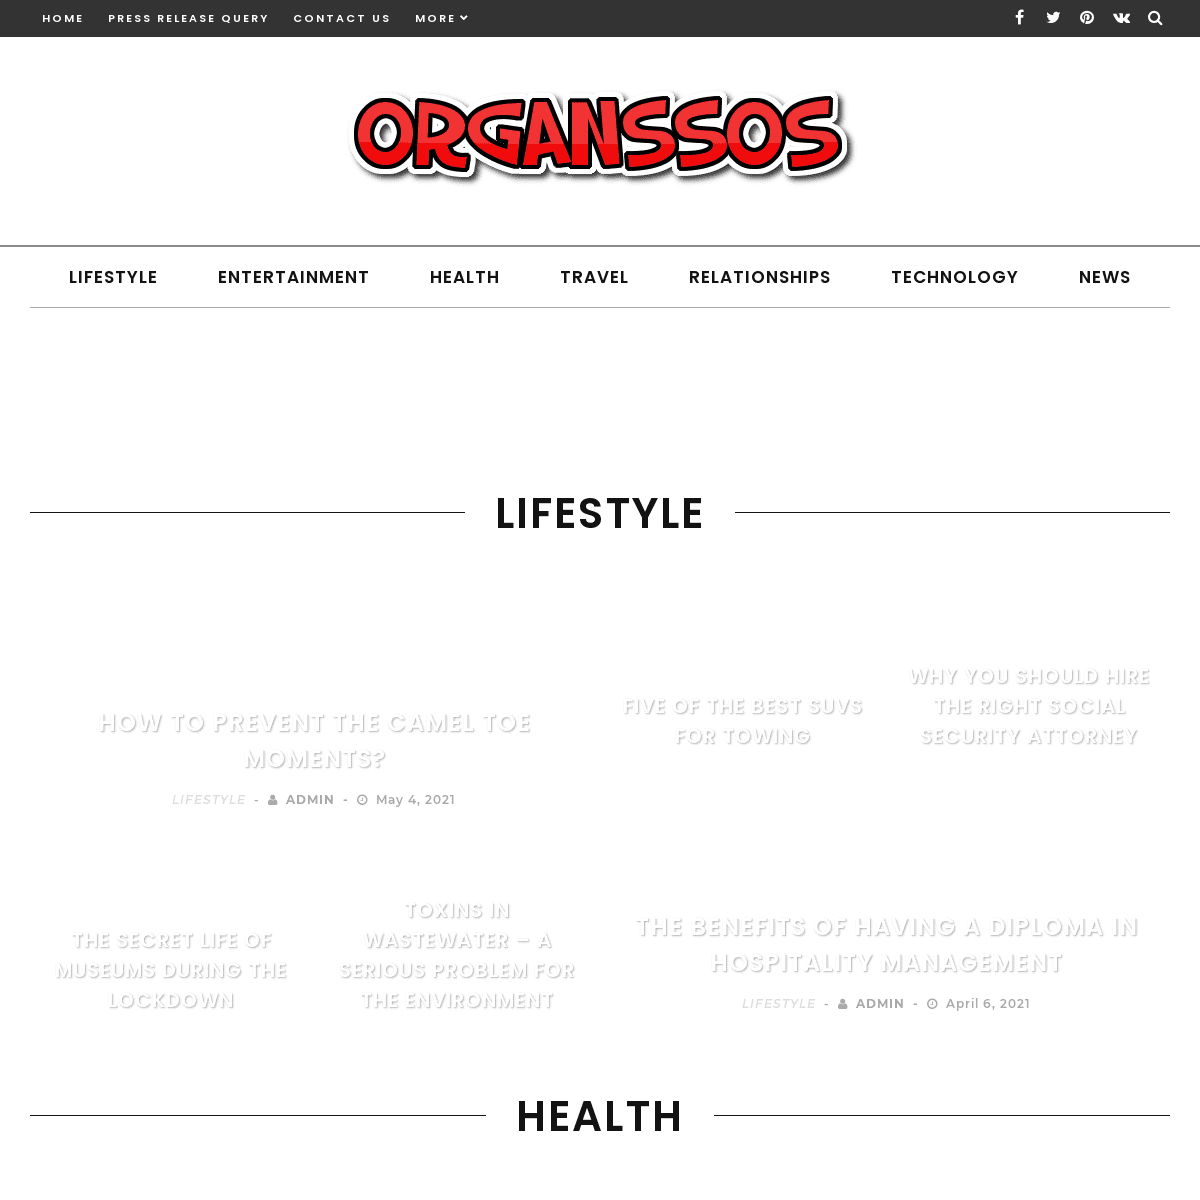 A complete backup of https://organssos.com